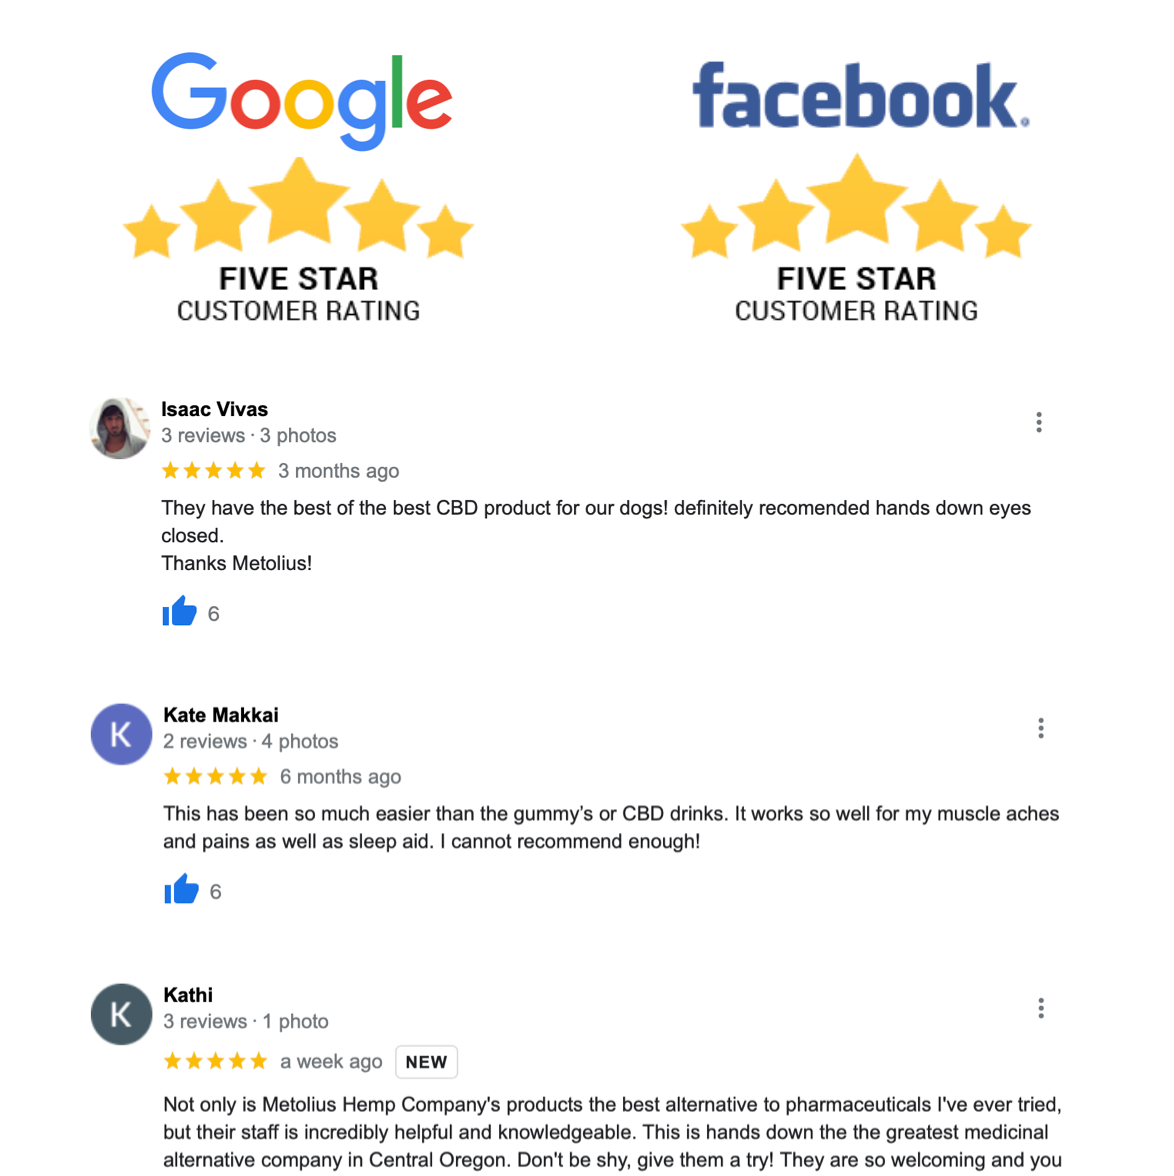 Google Five Star Customer Rating And Facebook Five Star Customer Rating For Metolius Hemp Company